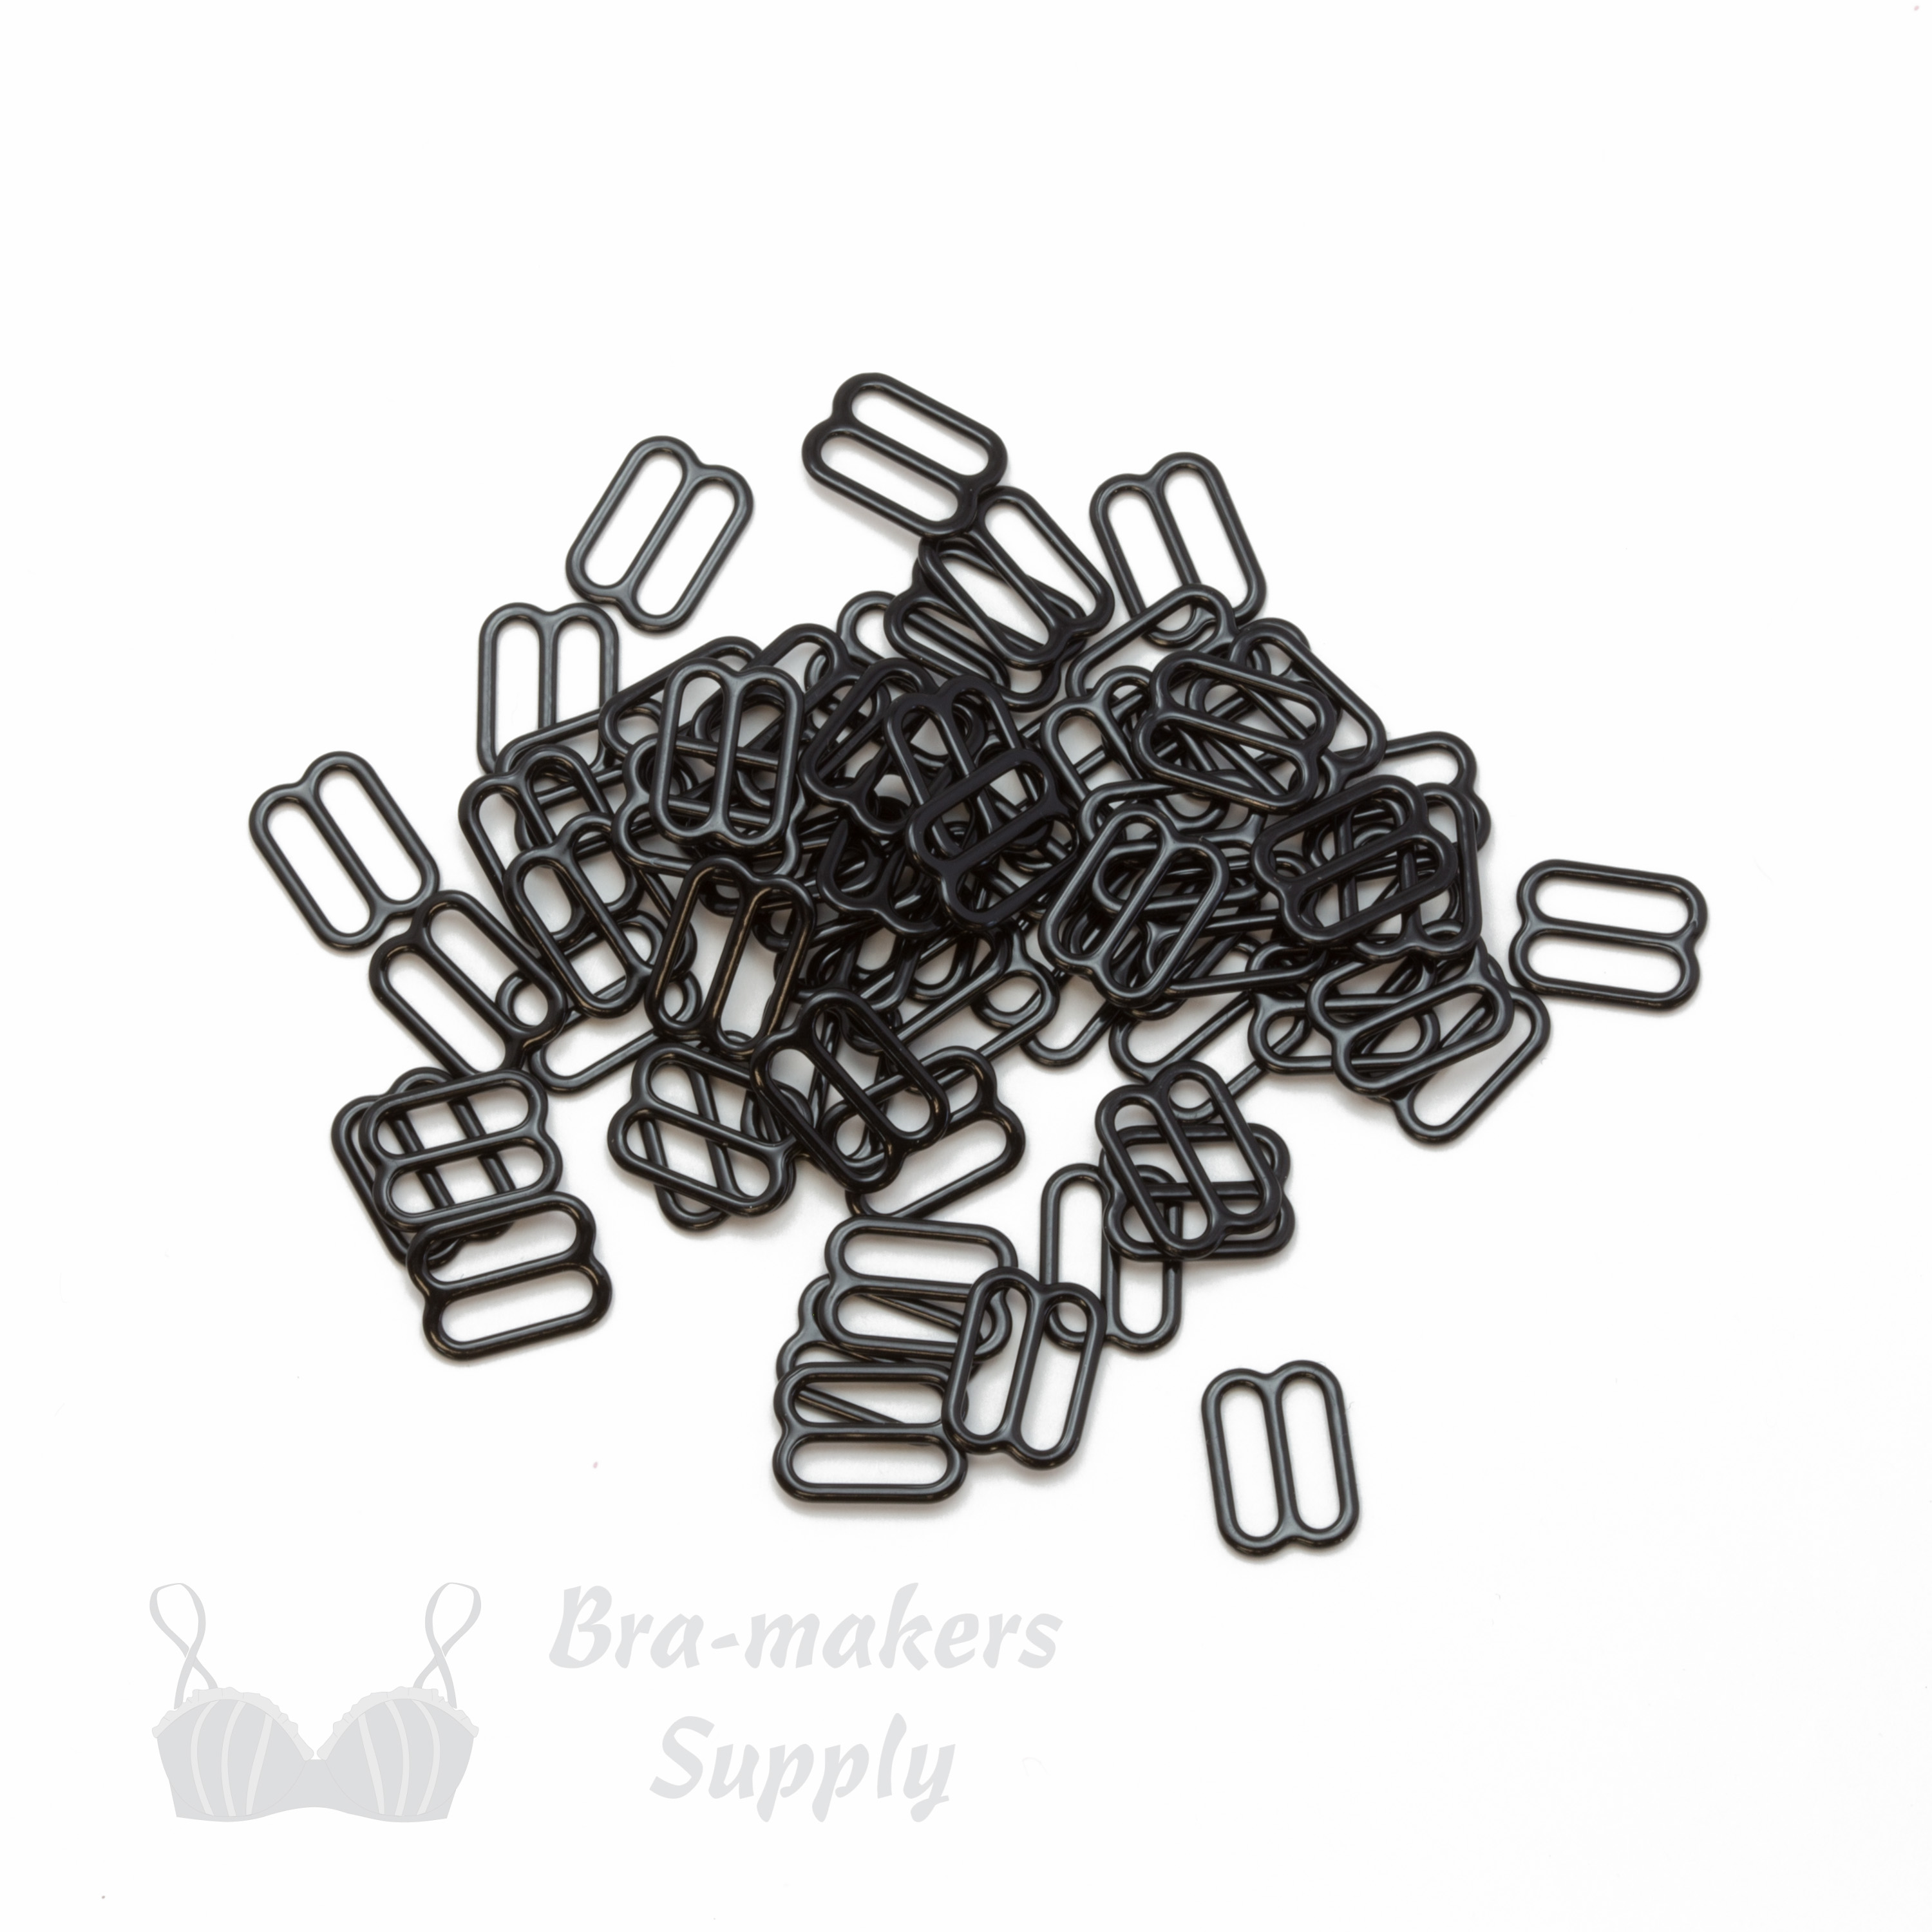 half inch 12mm rm-400 S black nylon coated metal rings sliders or anthracite Pantone 19-4007 from Bra-Makers Supply 100 sliders shown